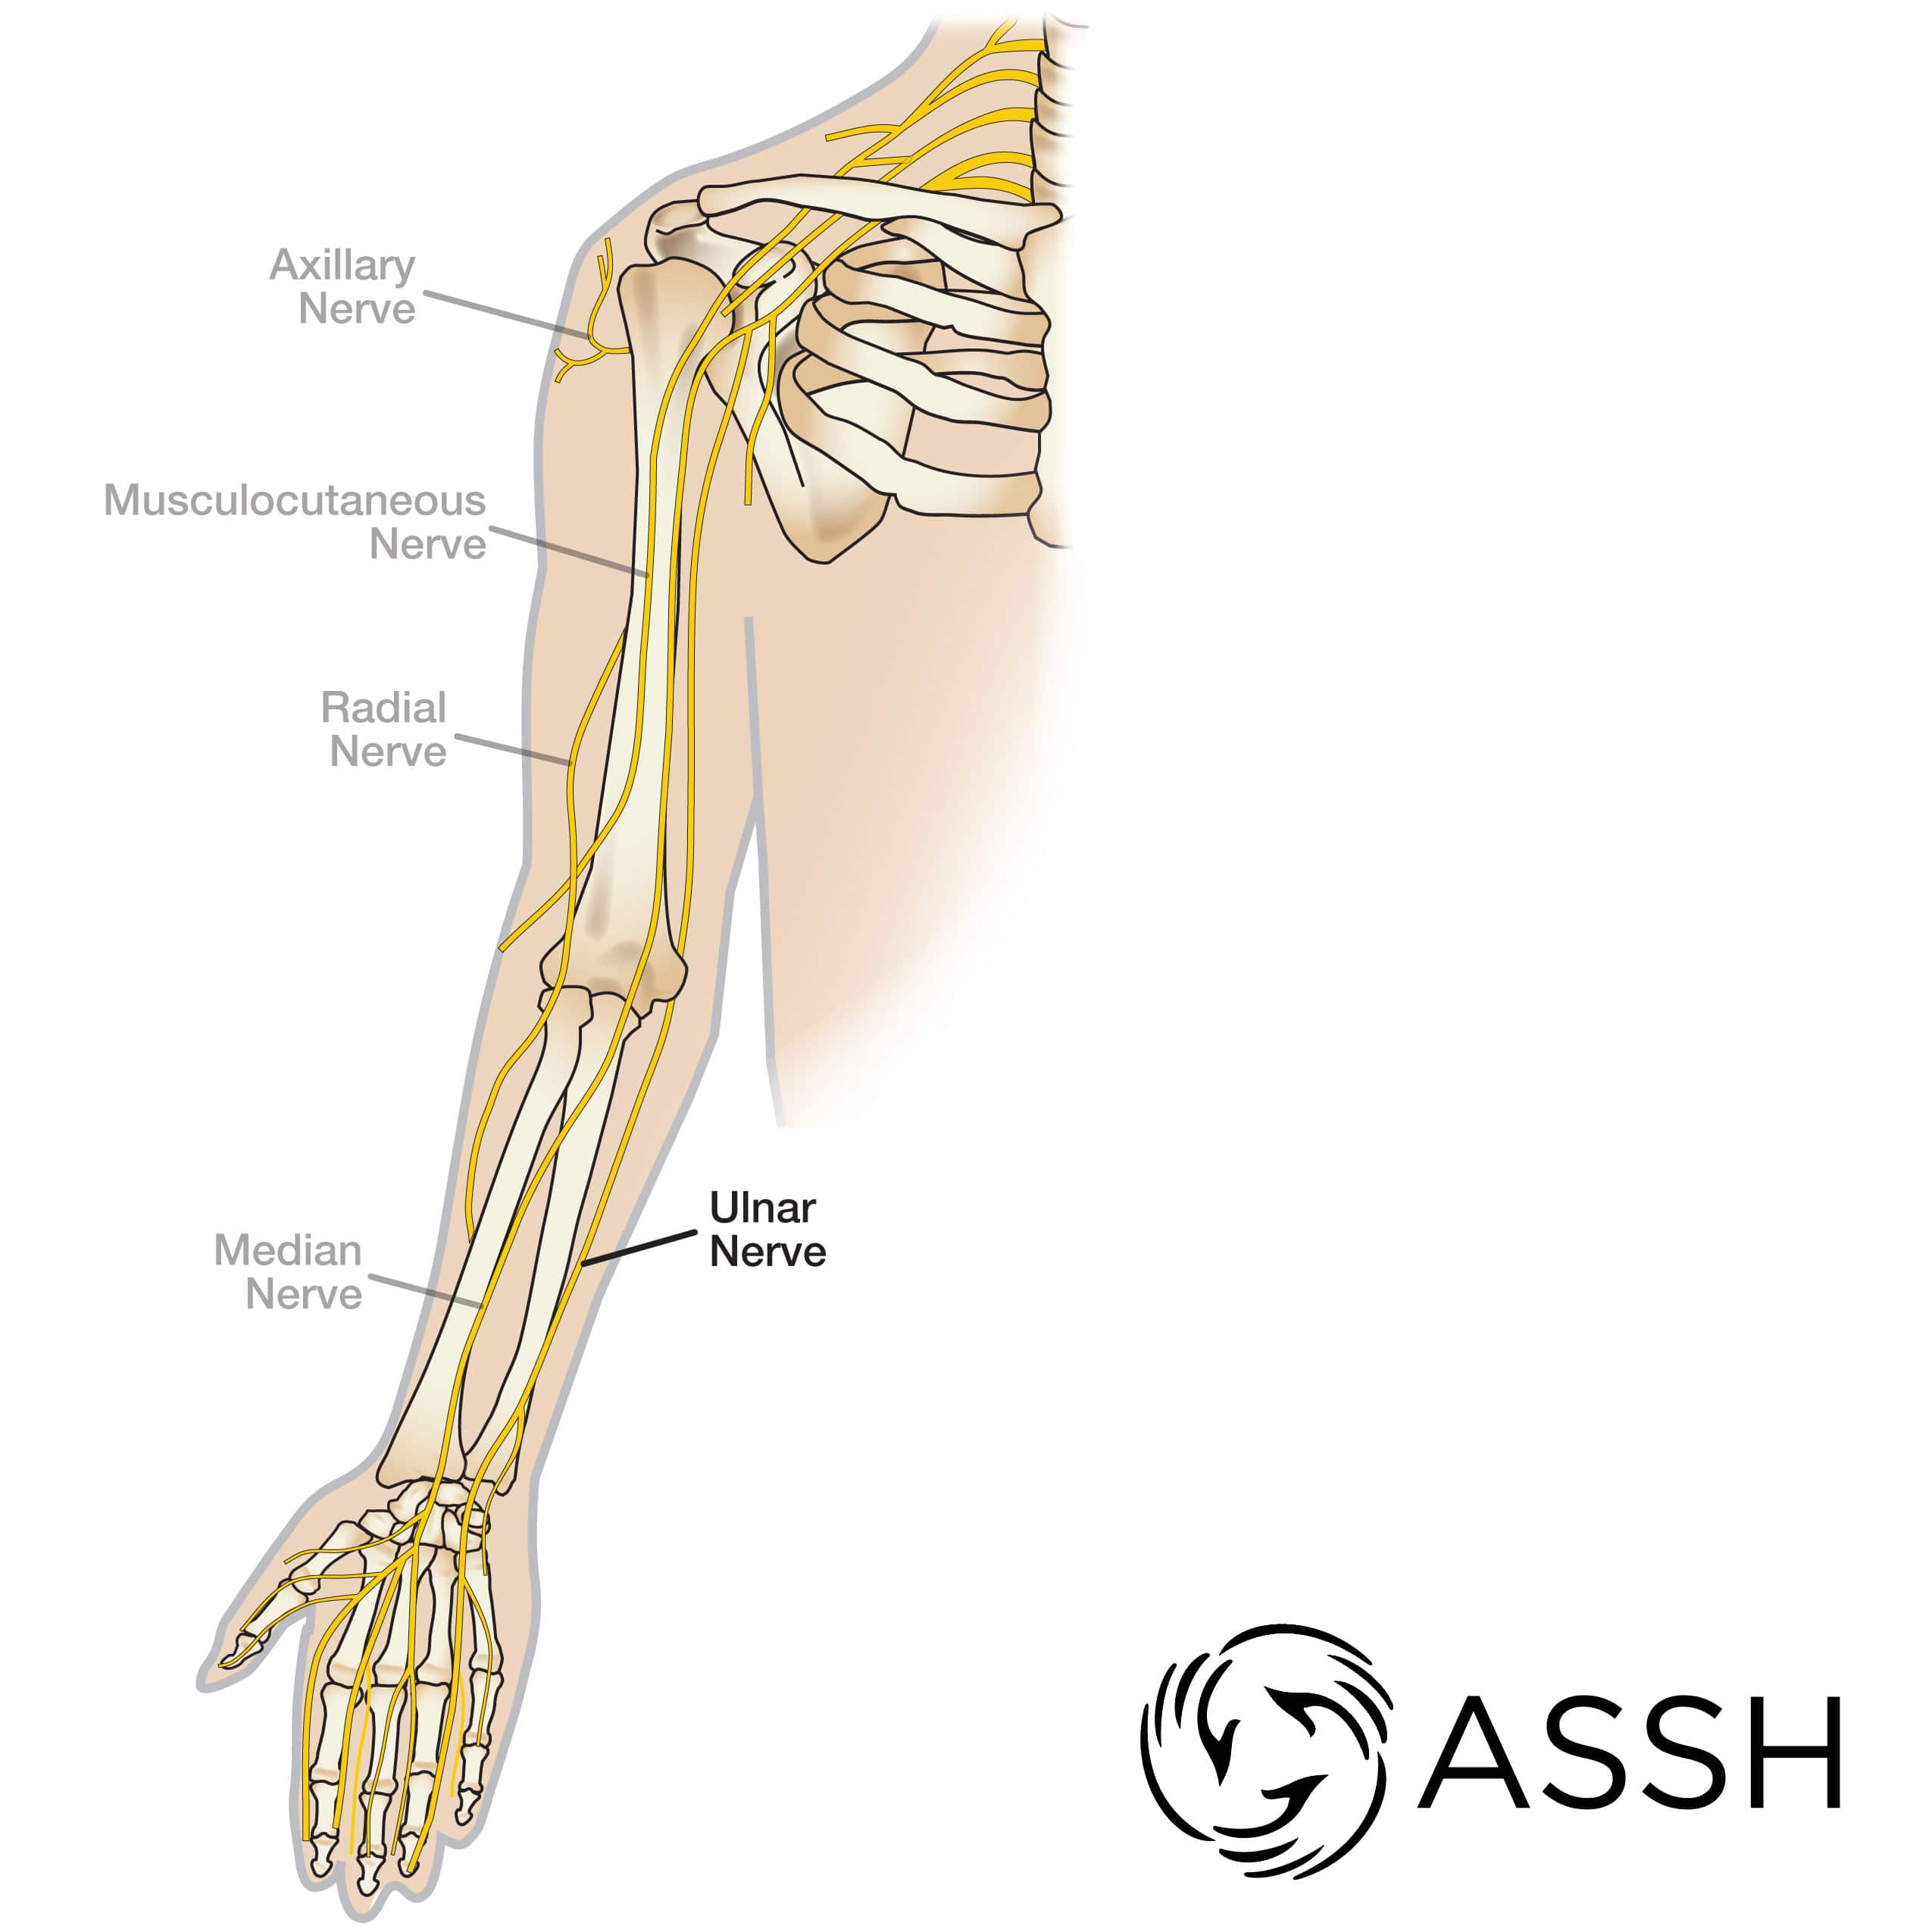 Median nerve: Anatomy, origin, branches, course